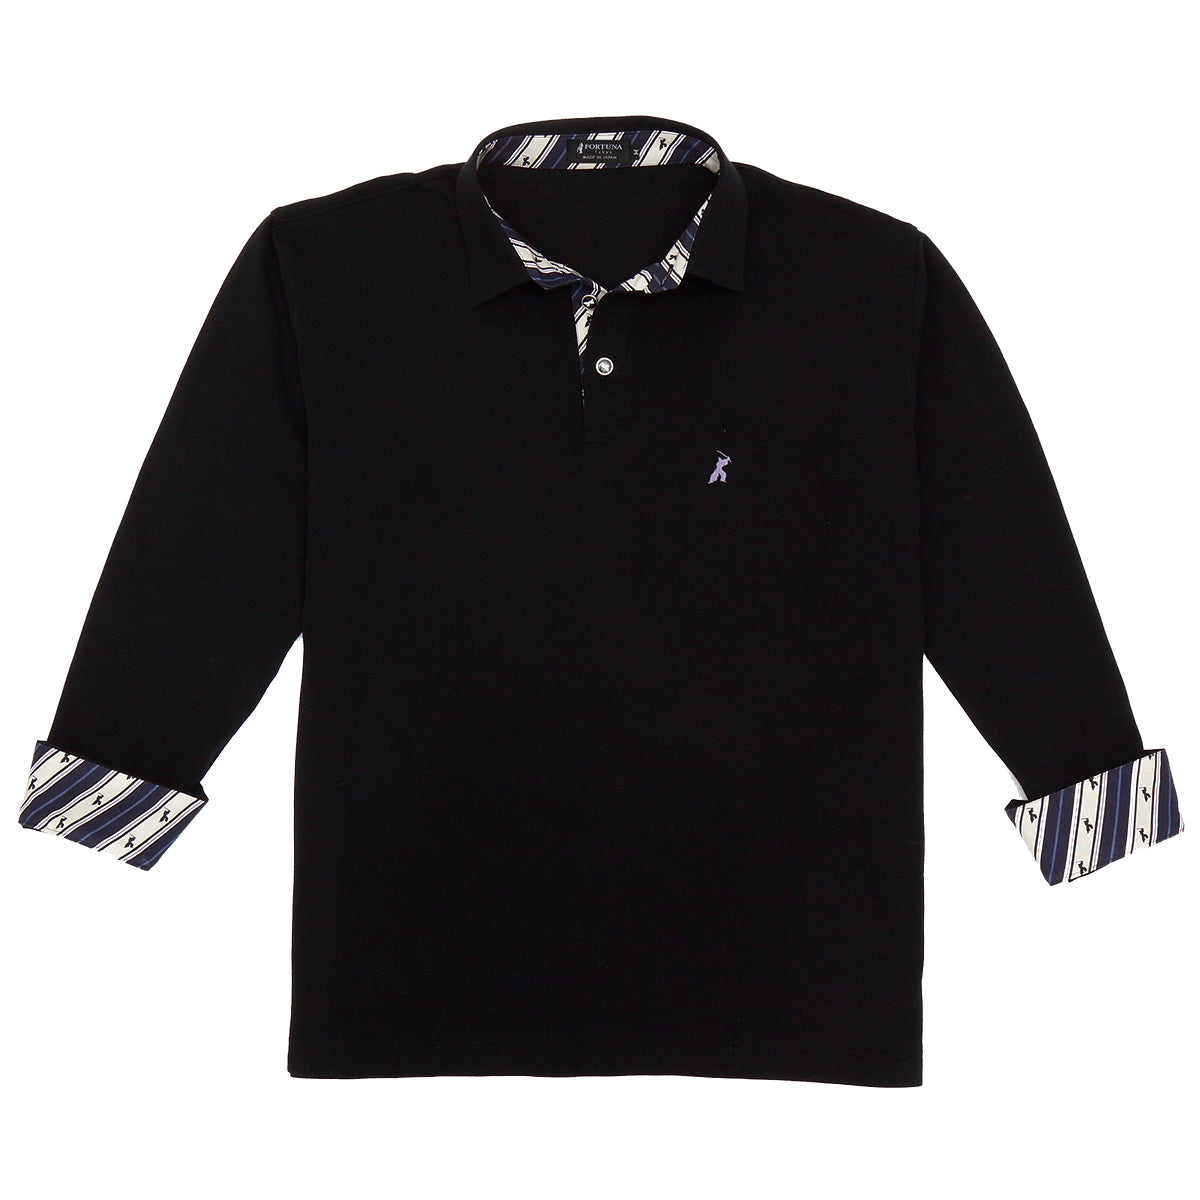 Men’s Long Sleeve Cotton Sports Polo Shirt -16. Samurai Design Black Made in Japan FORTUNA Tokyo